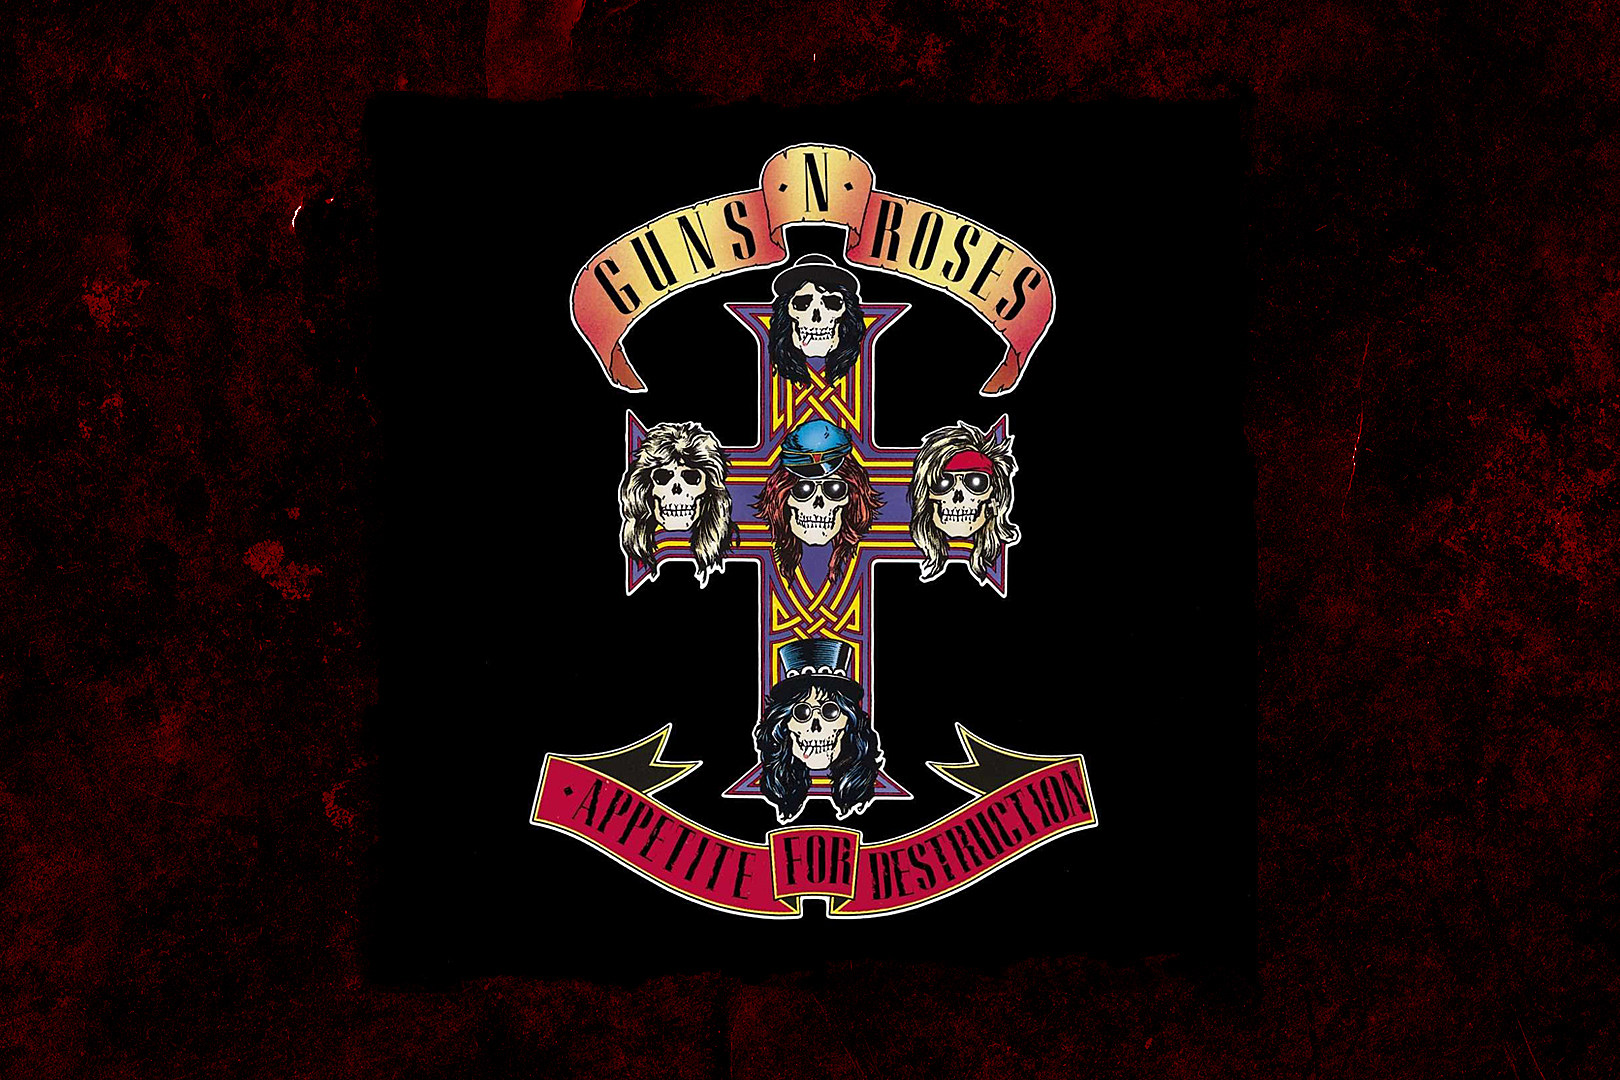 34 Years Ago: Guns N' Roses Release 'Appetite for Destruction'